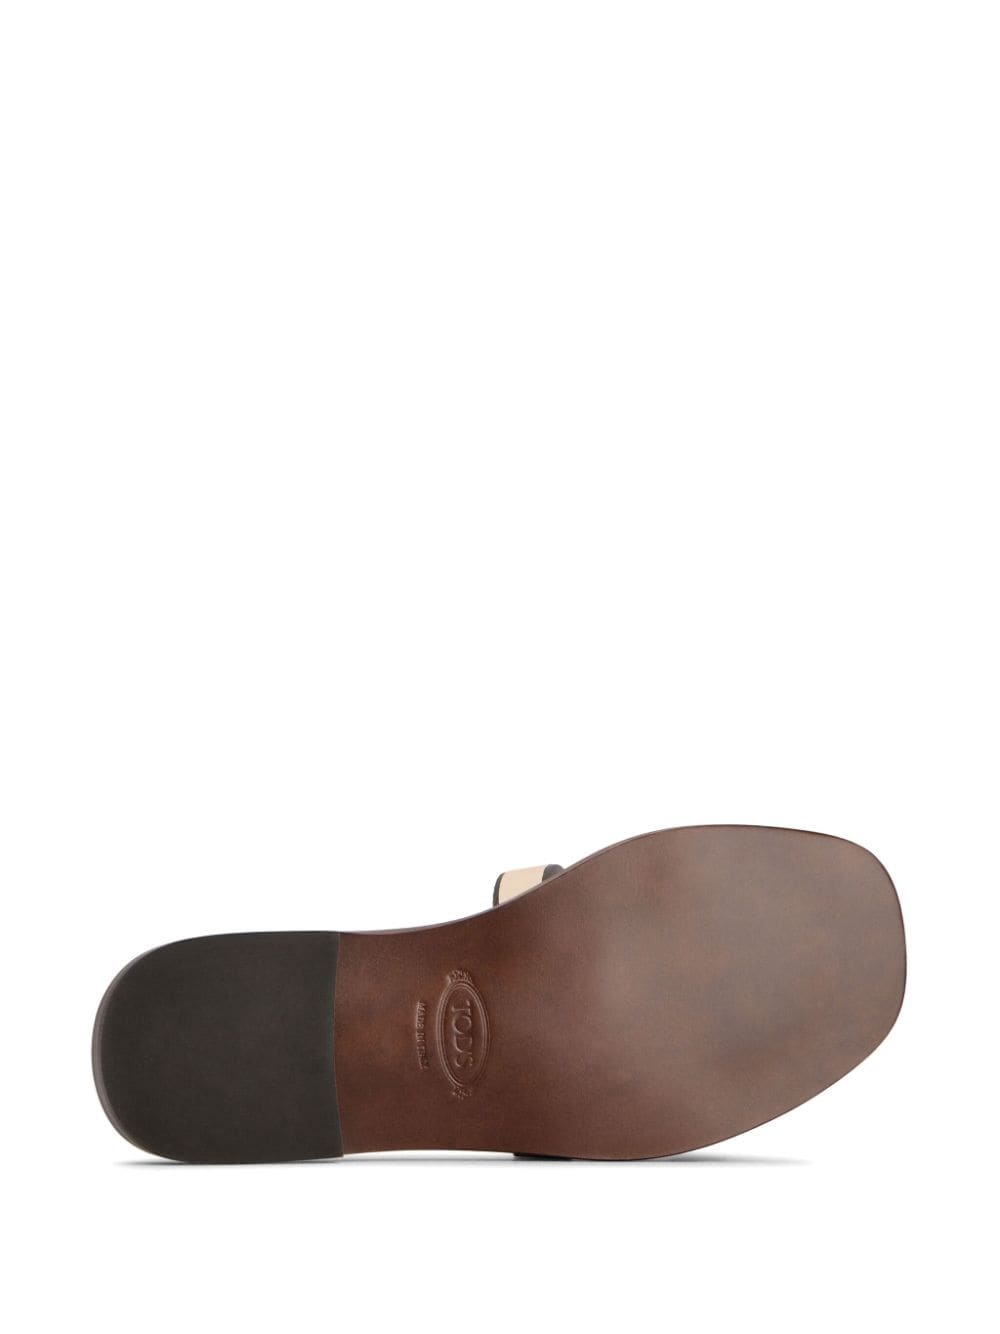 leather logo strap sandals - 3